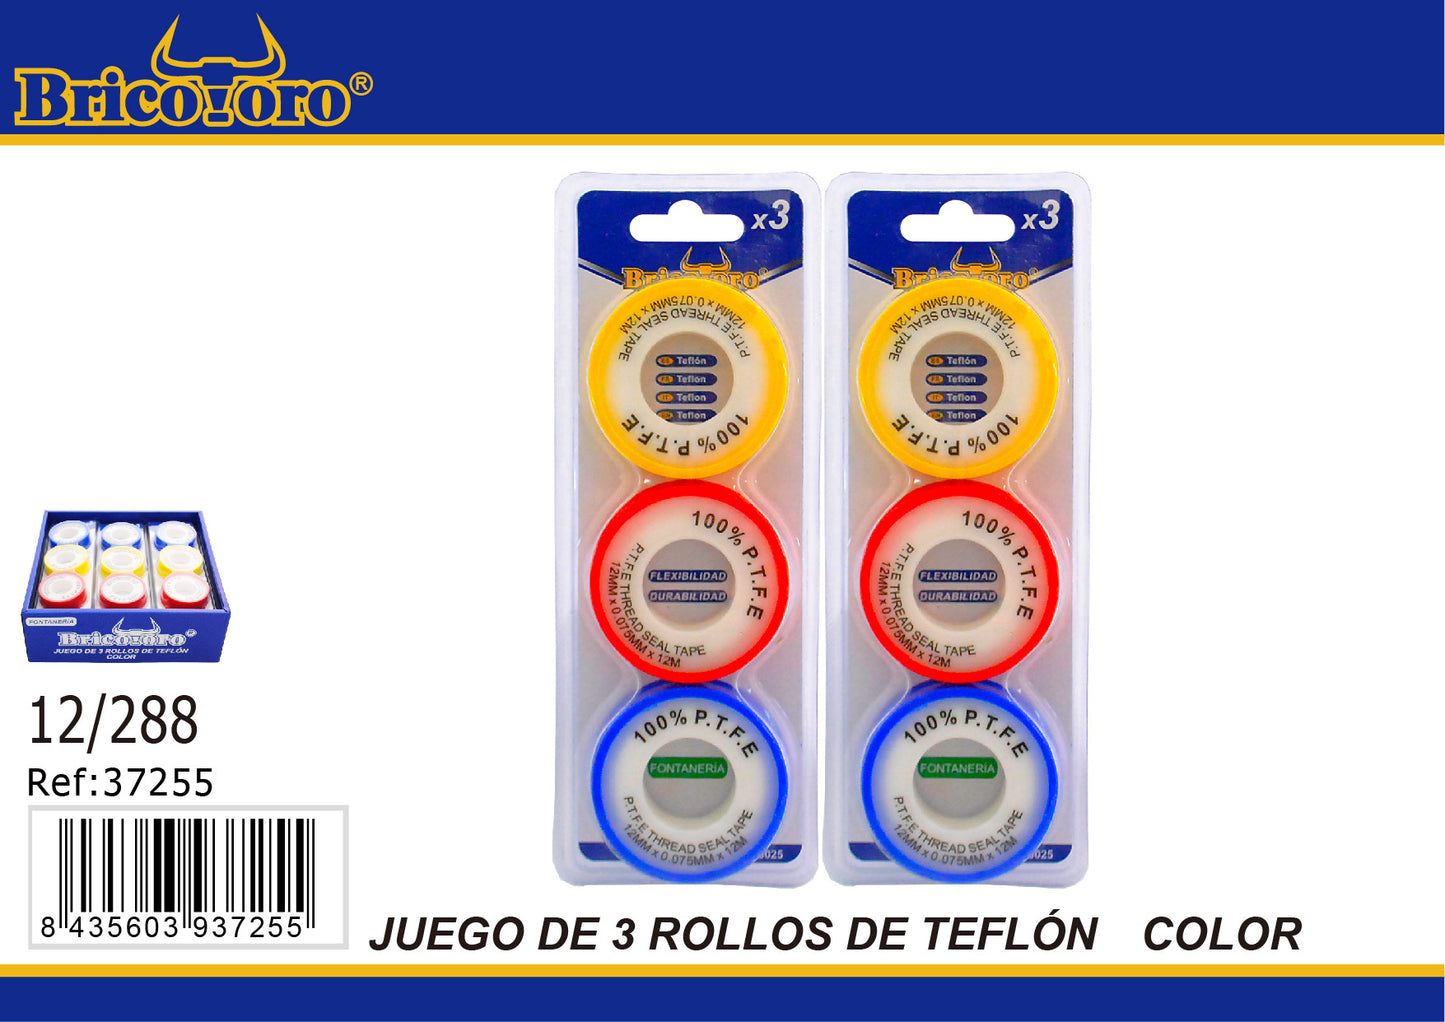 Conjunto de 3 rolos coloridos de Teflon